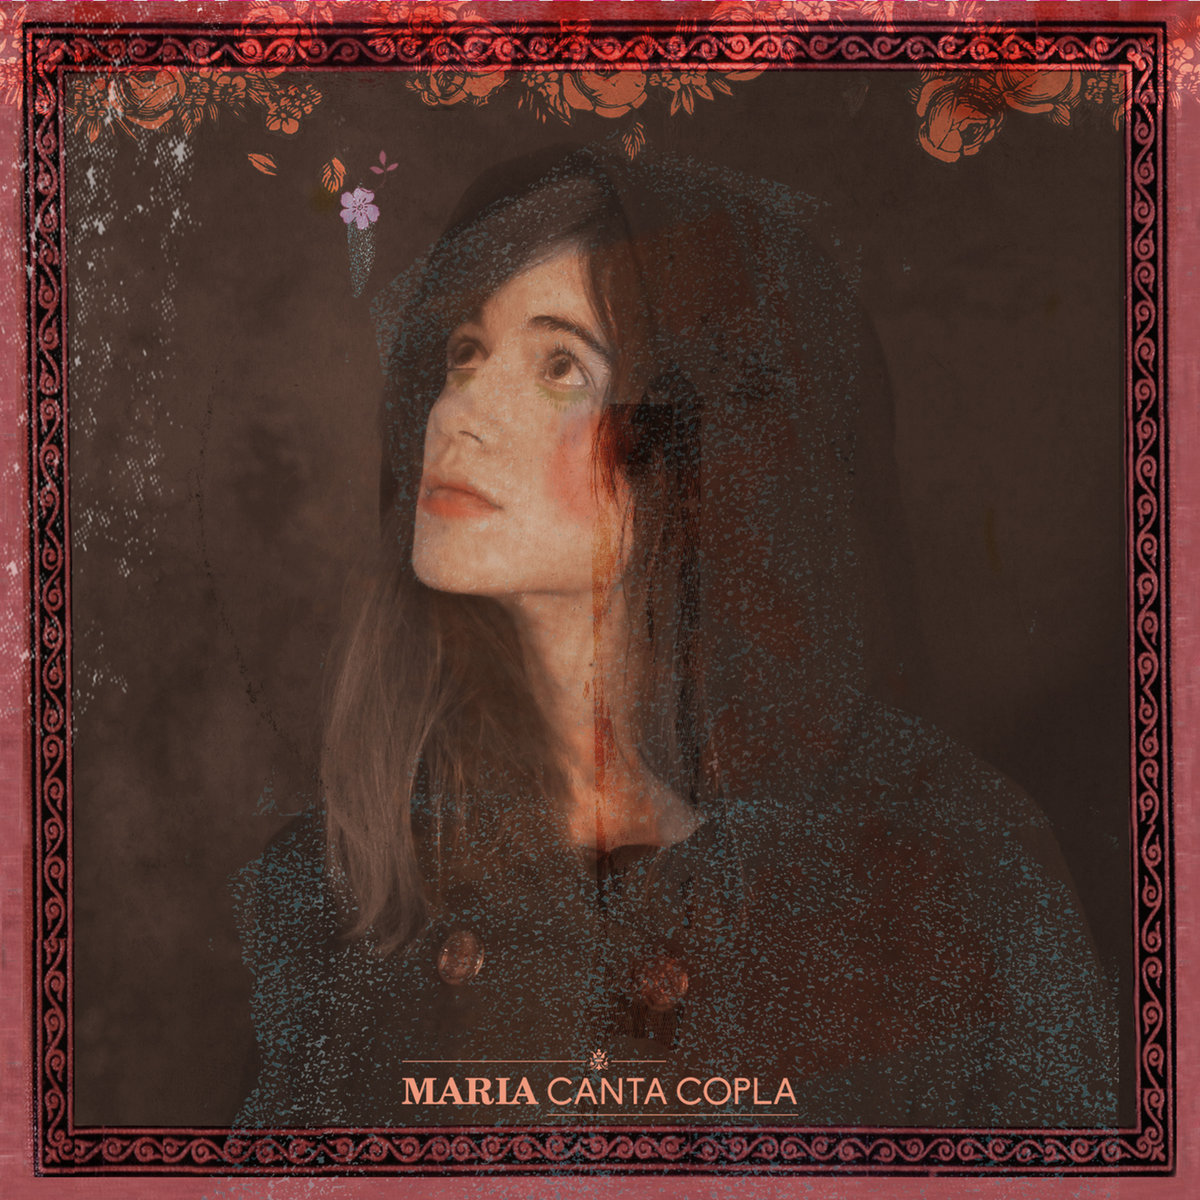 María Rodés "Canta copla" LP